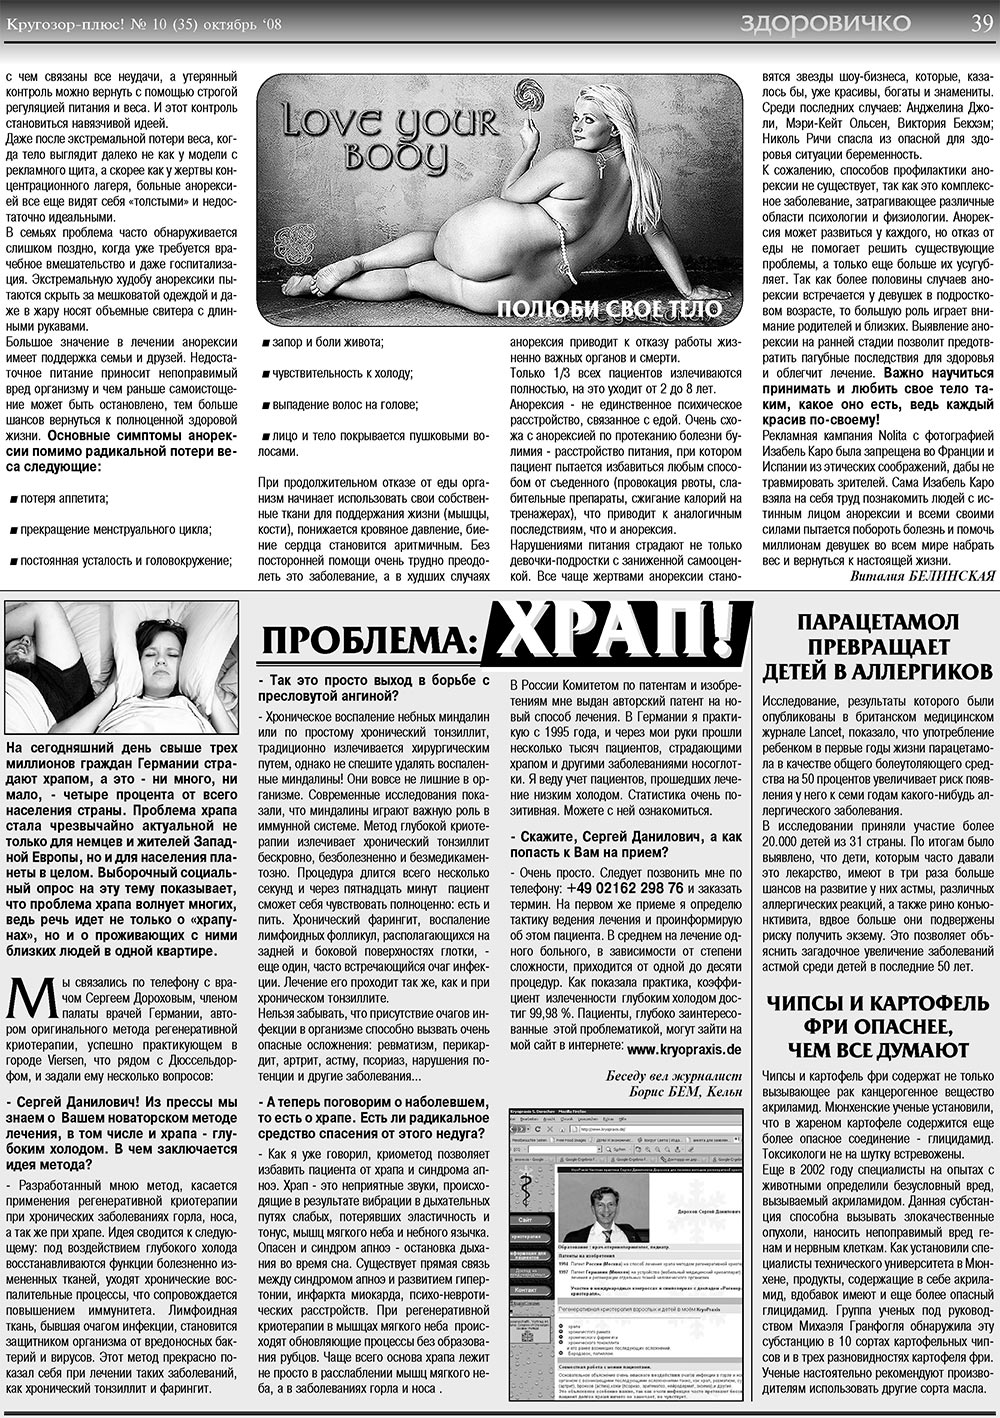 Кругозор плюс! (газета). 2008 год, номер 10, стр. 39